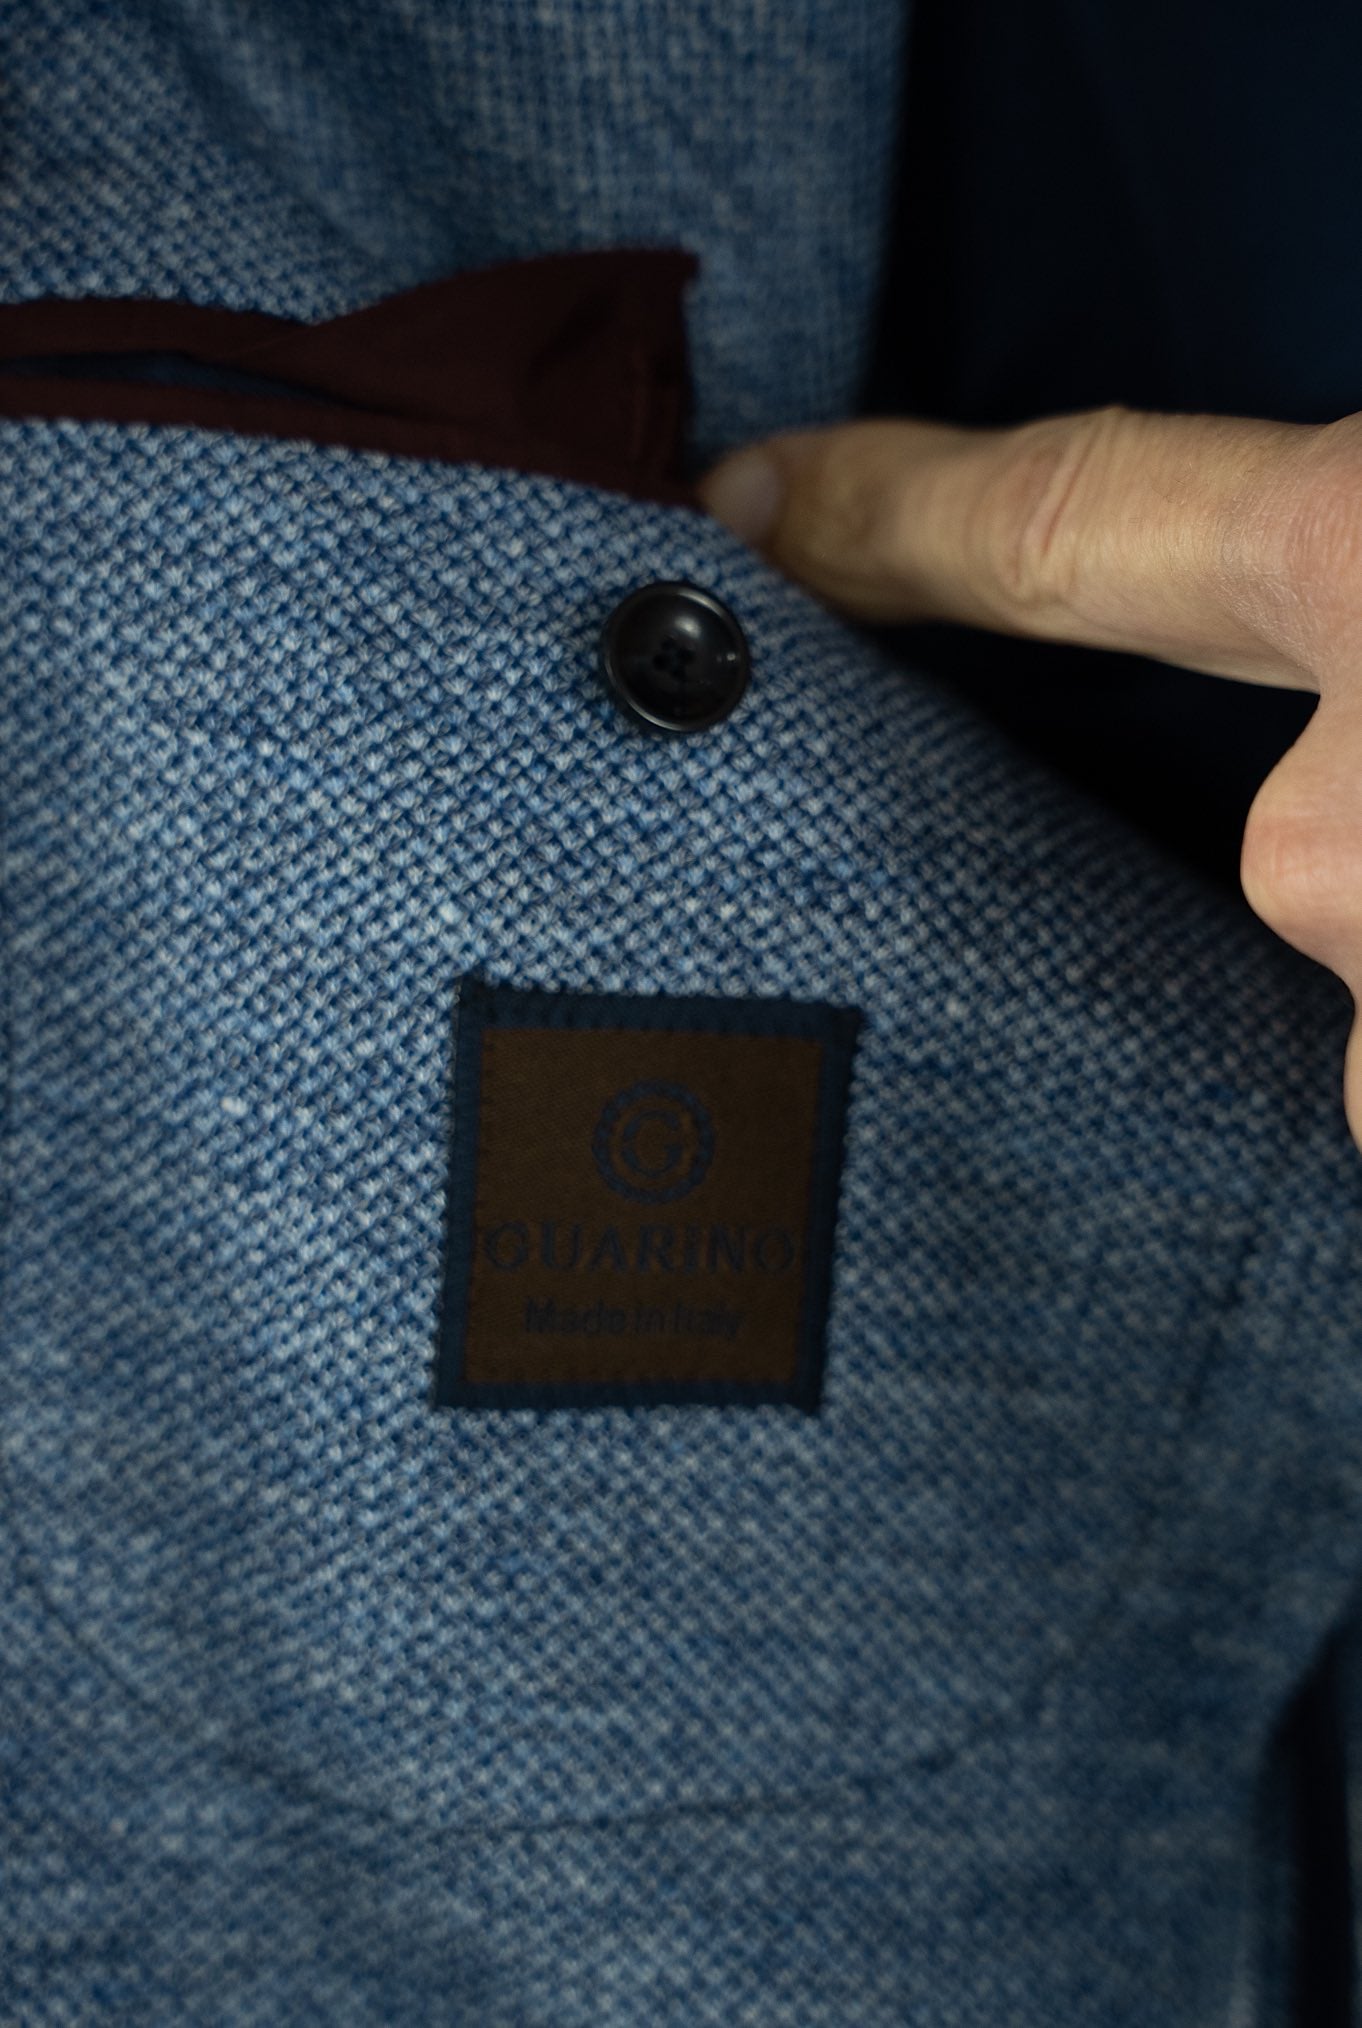 GUARINO Blue Mélange Cotton and Linen Jersey Jacket